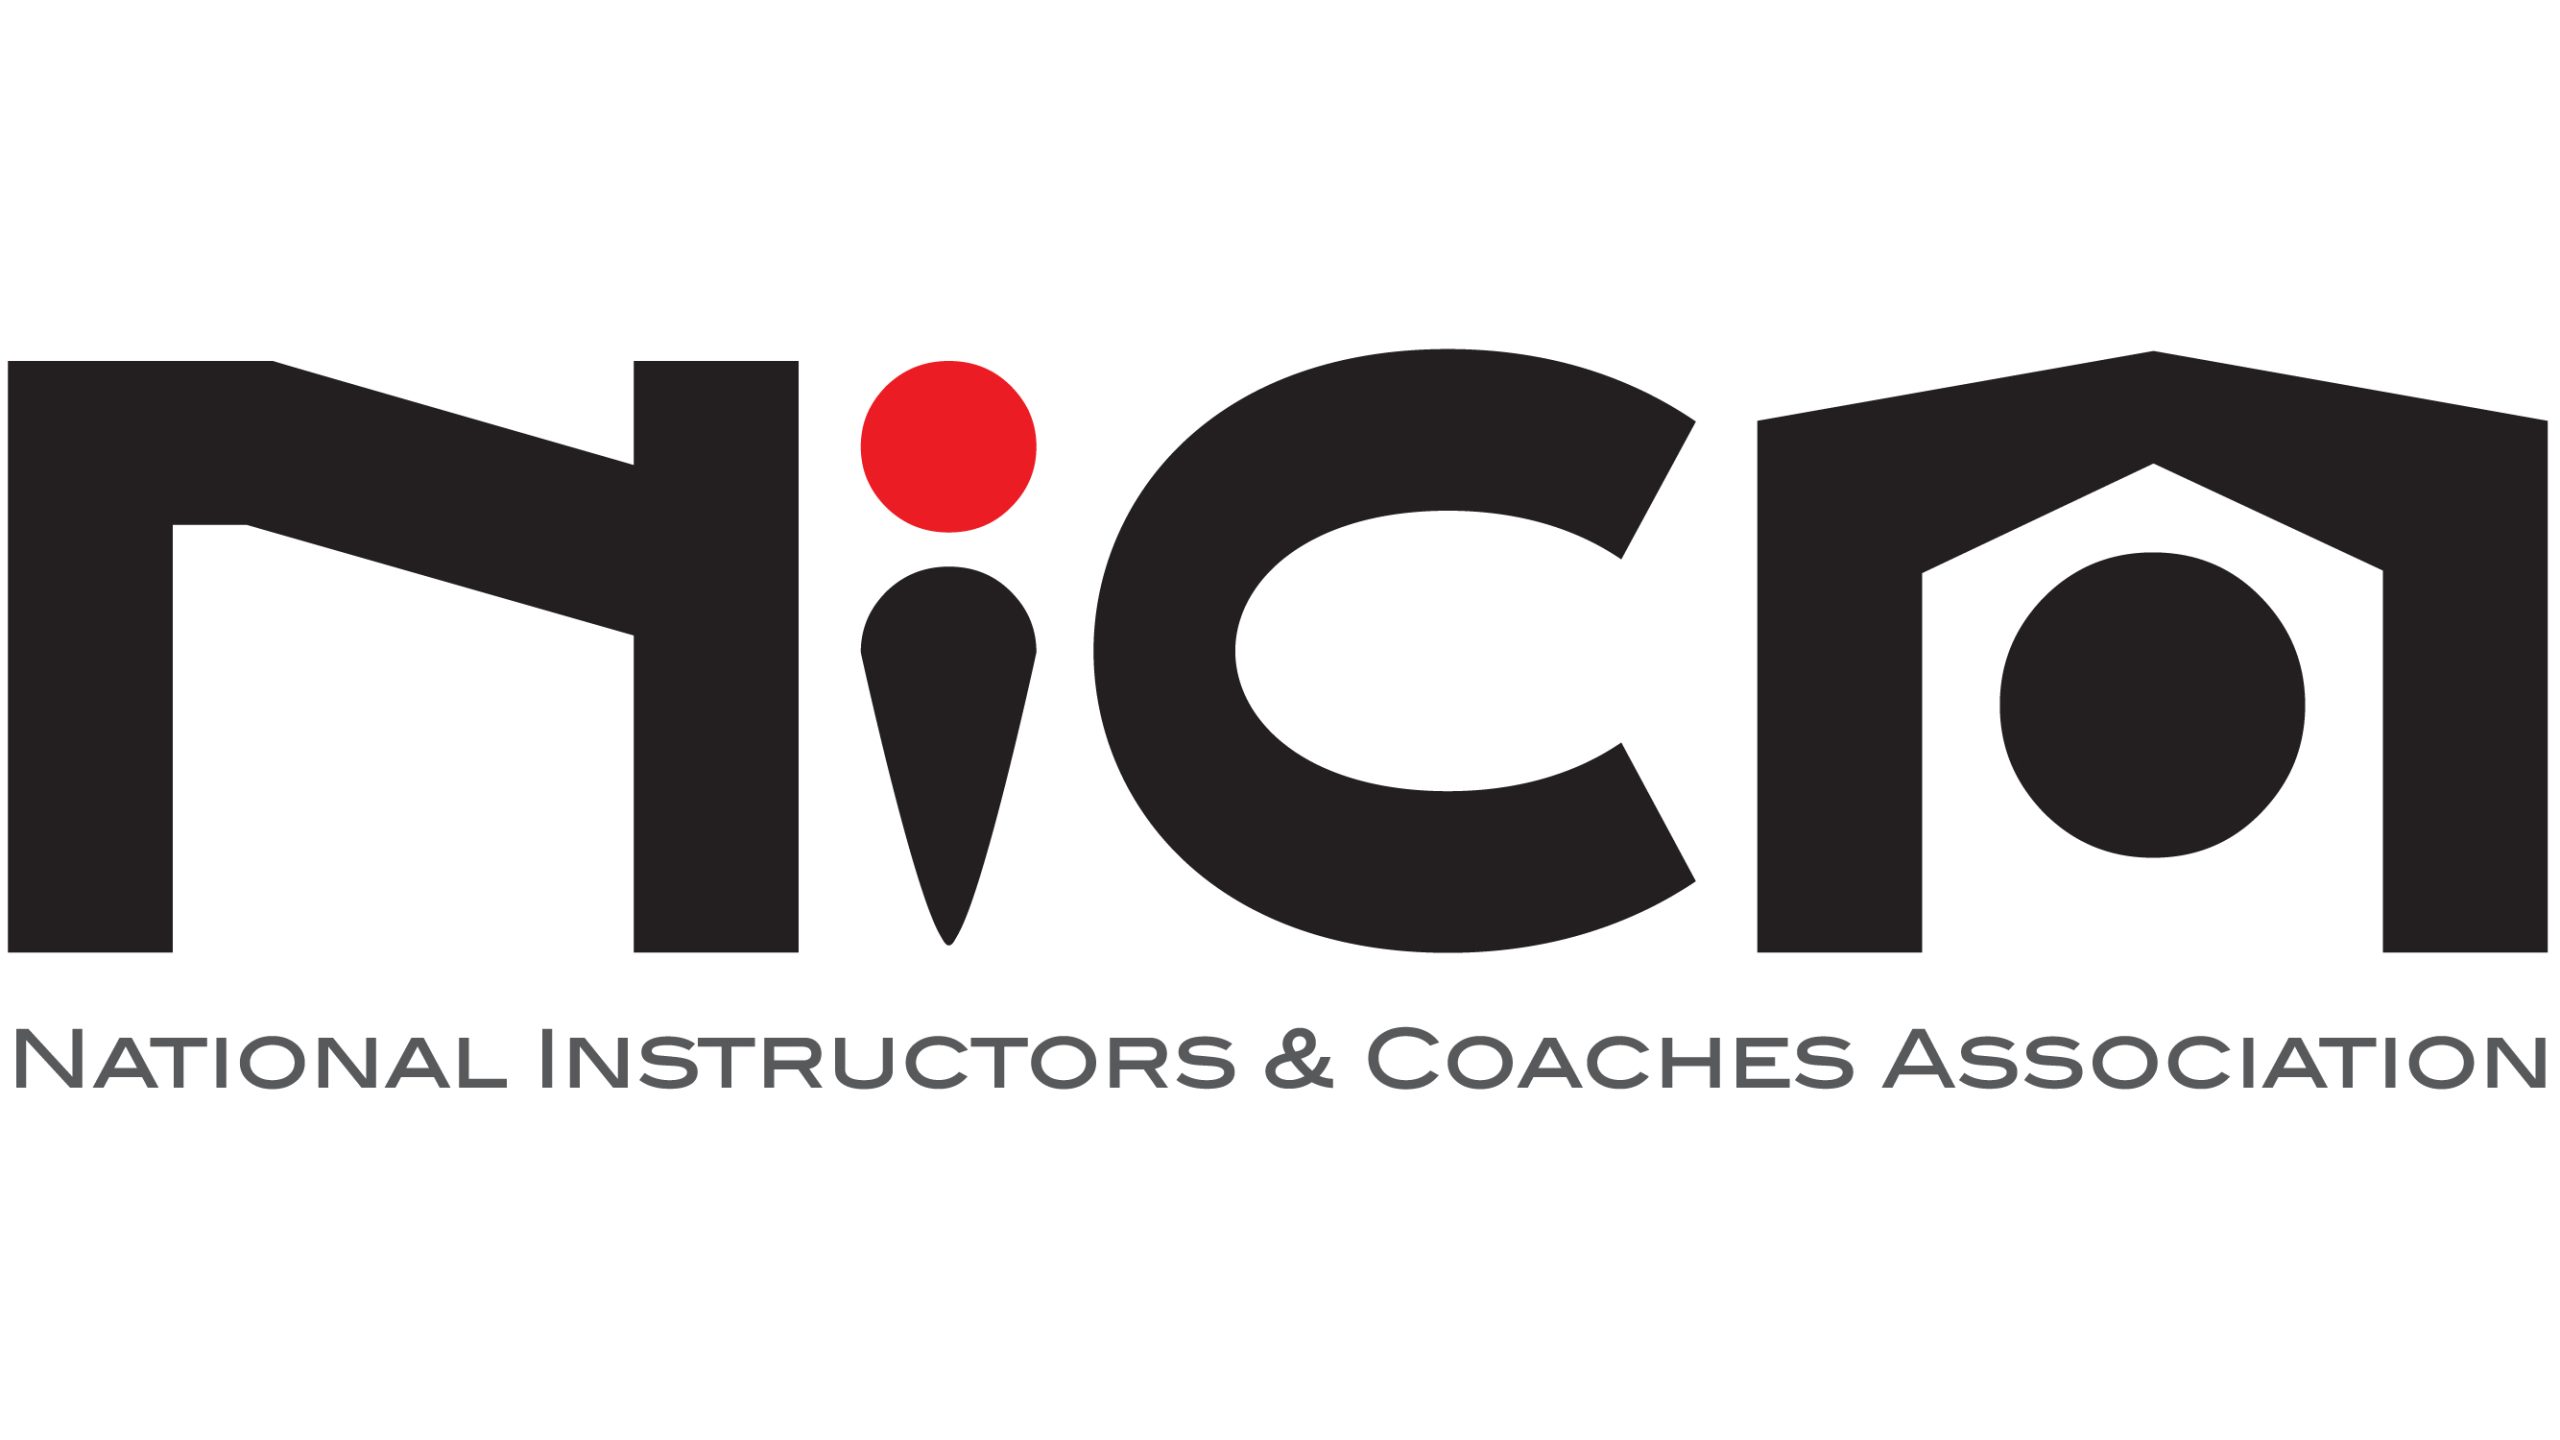 National Instructors & Coaches Association (NICA)